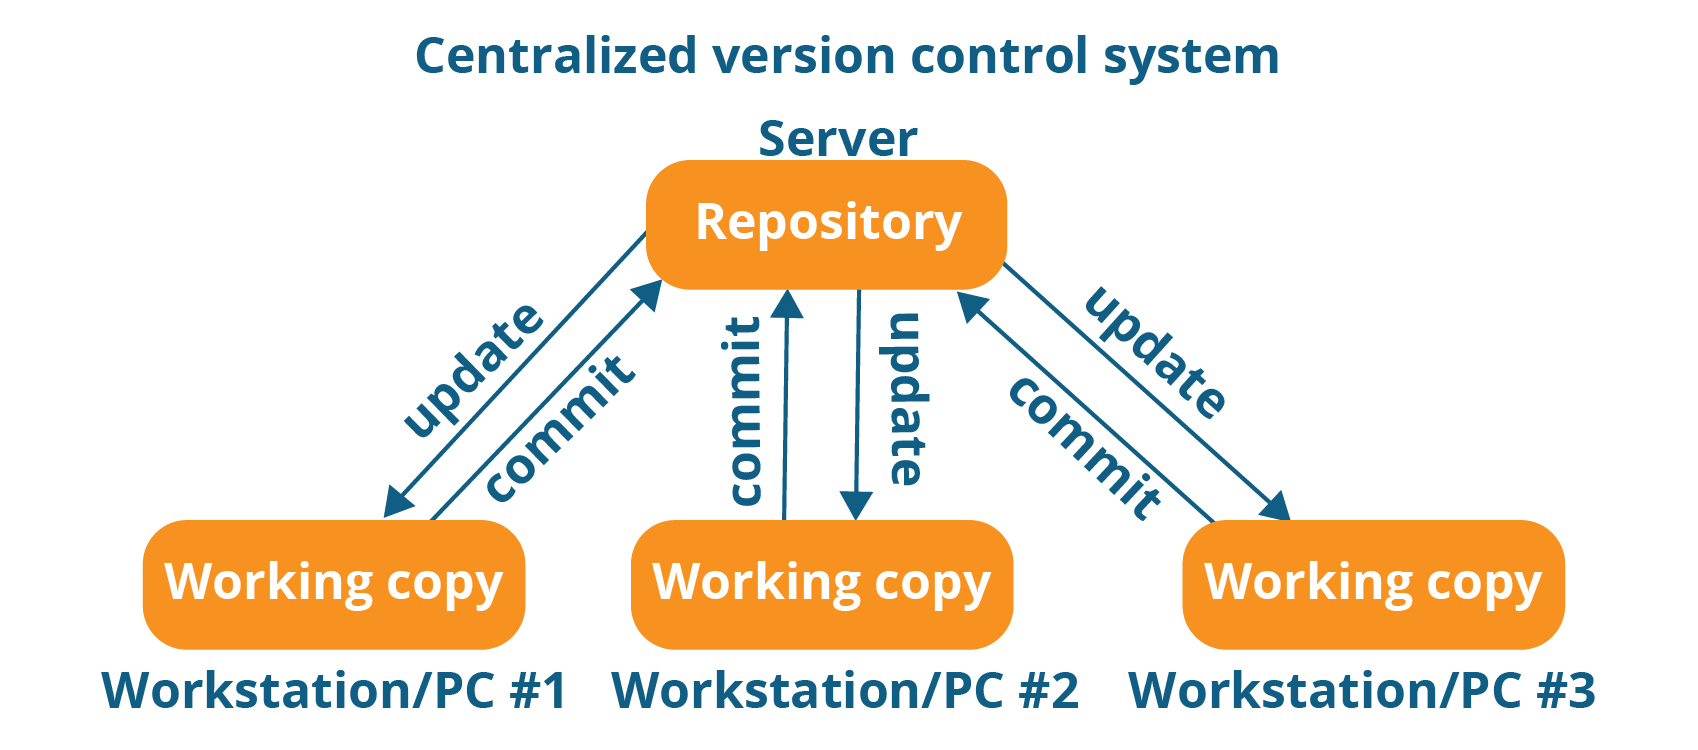 version control system